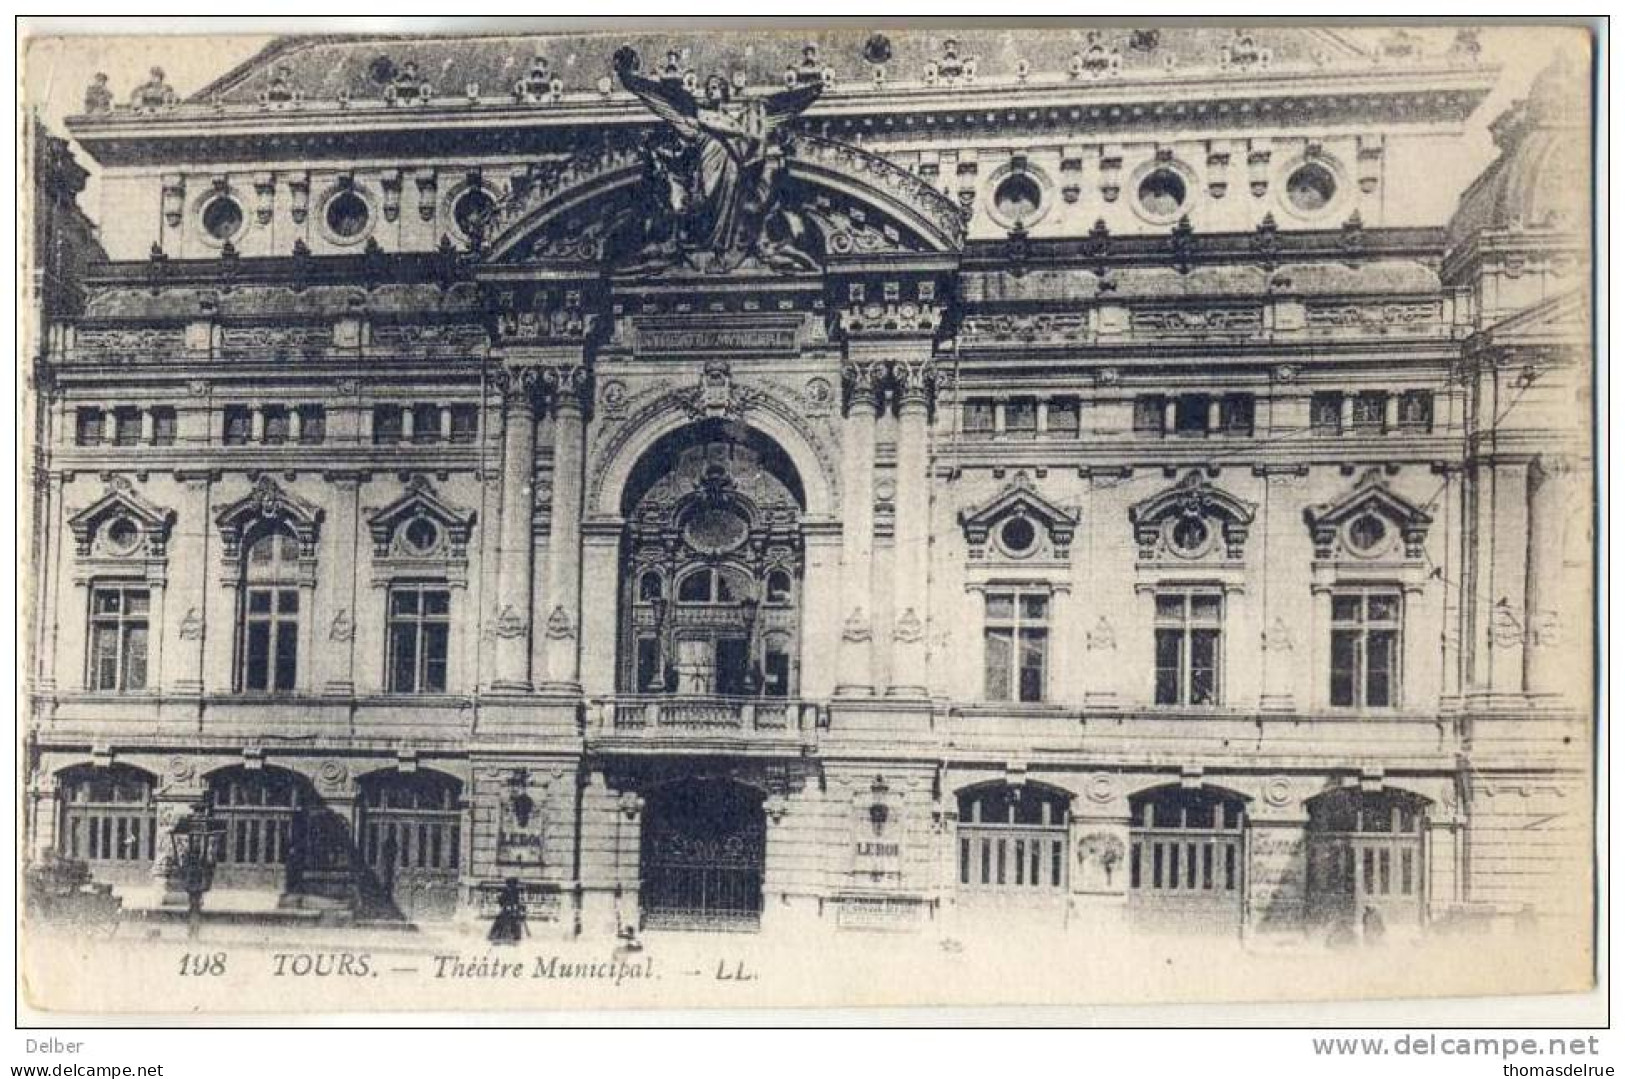 _G985: Carte Postale: 198- TOURS Théâtre Muncipal: 15c Semeuse: - AK: ROUSBRUGGE-HARINGHE 16 XI.1917 - Niet-bezet Gebied